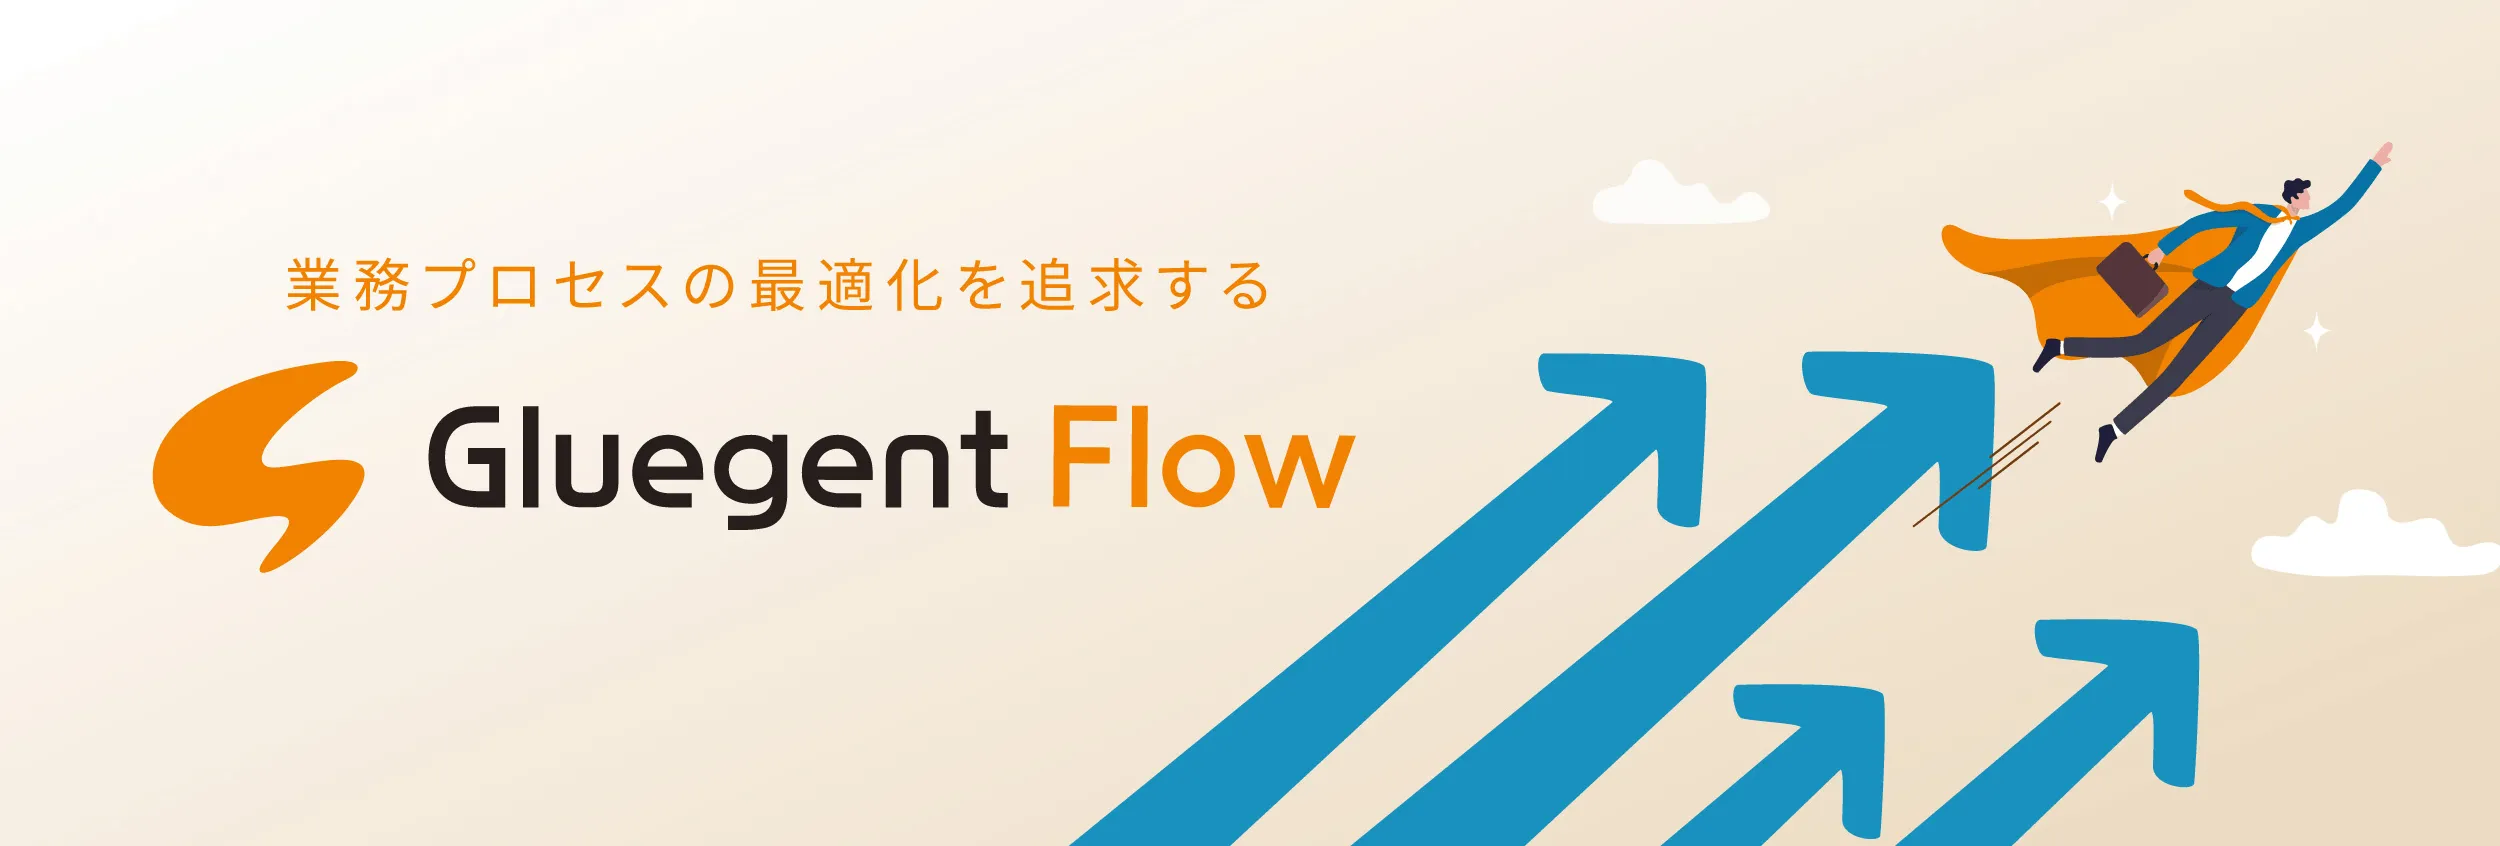 Gluegent Flow